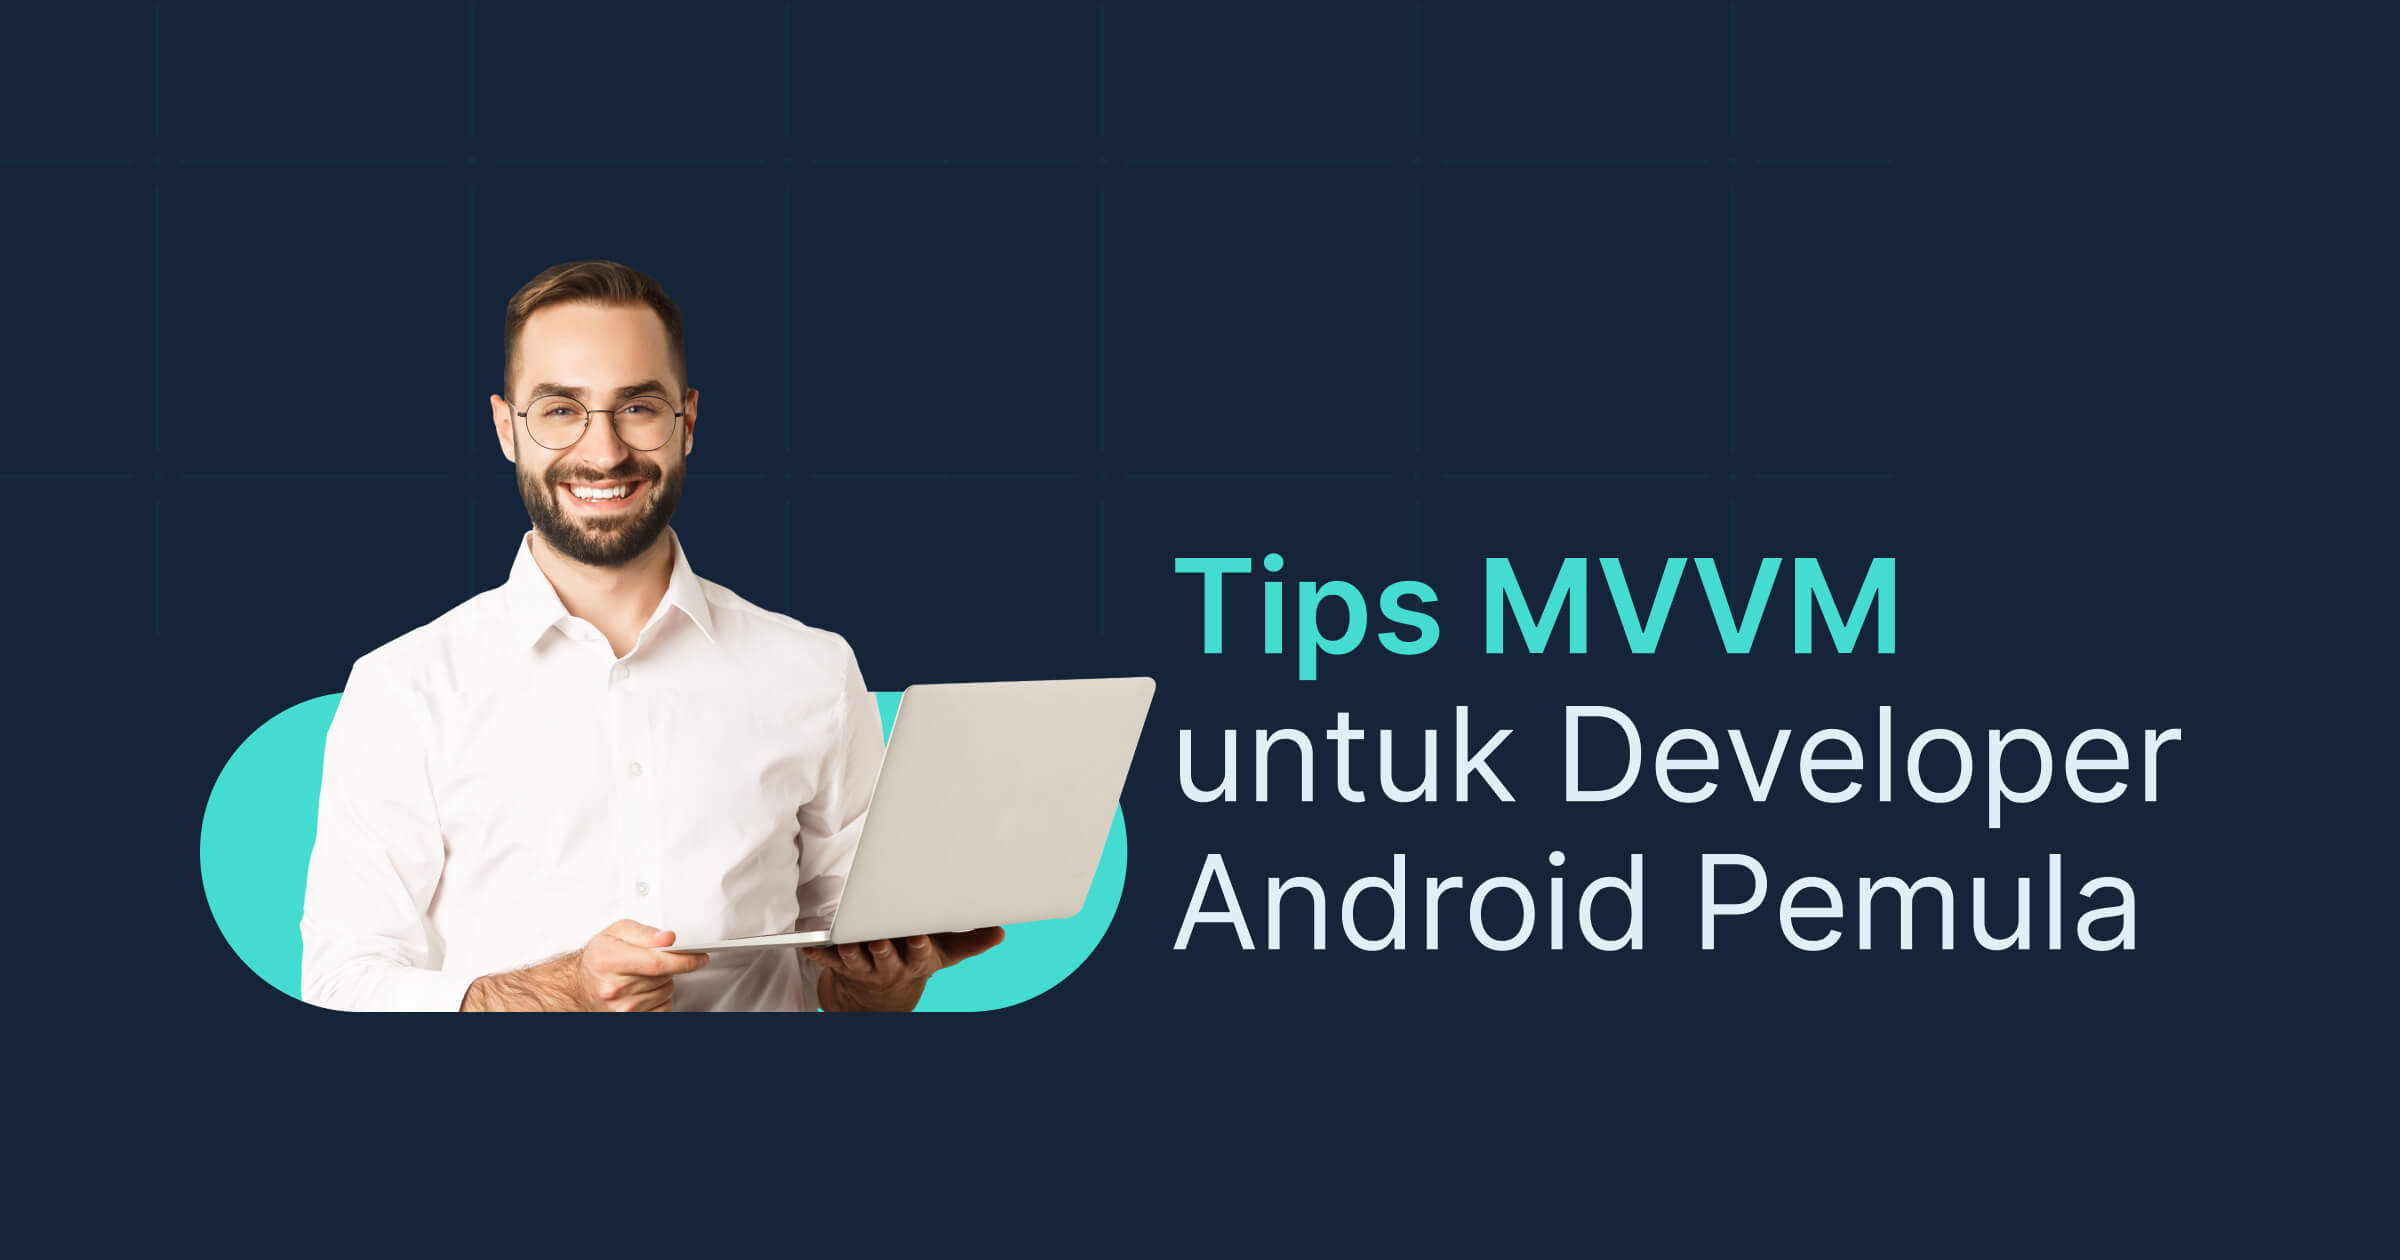 Tips MVVM untuk Developer Android Pemula